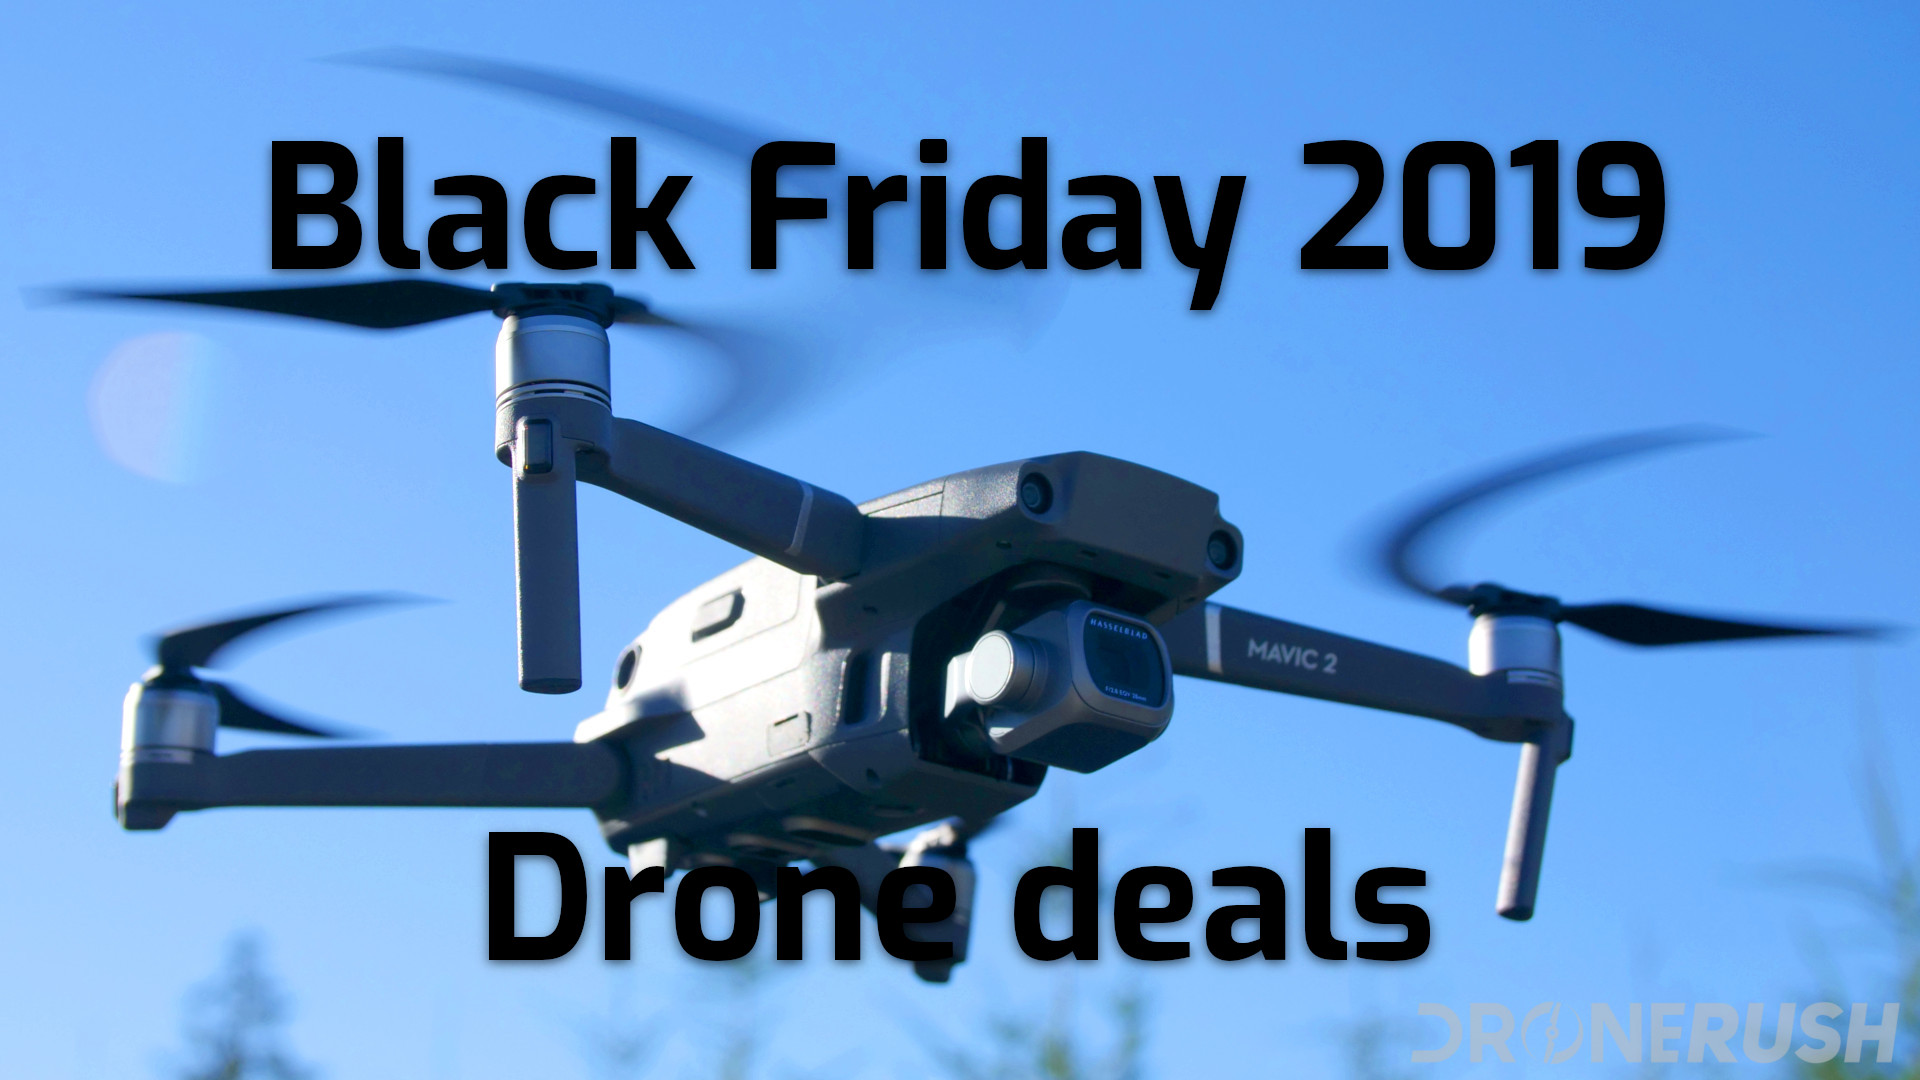 Black Friday 2019 drone deals DJI Mavic 2 Pro